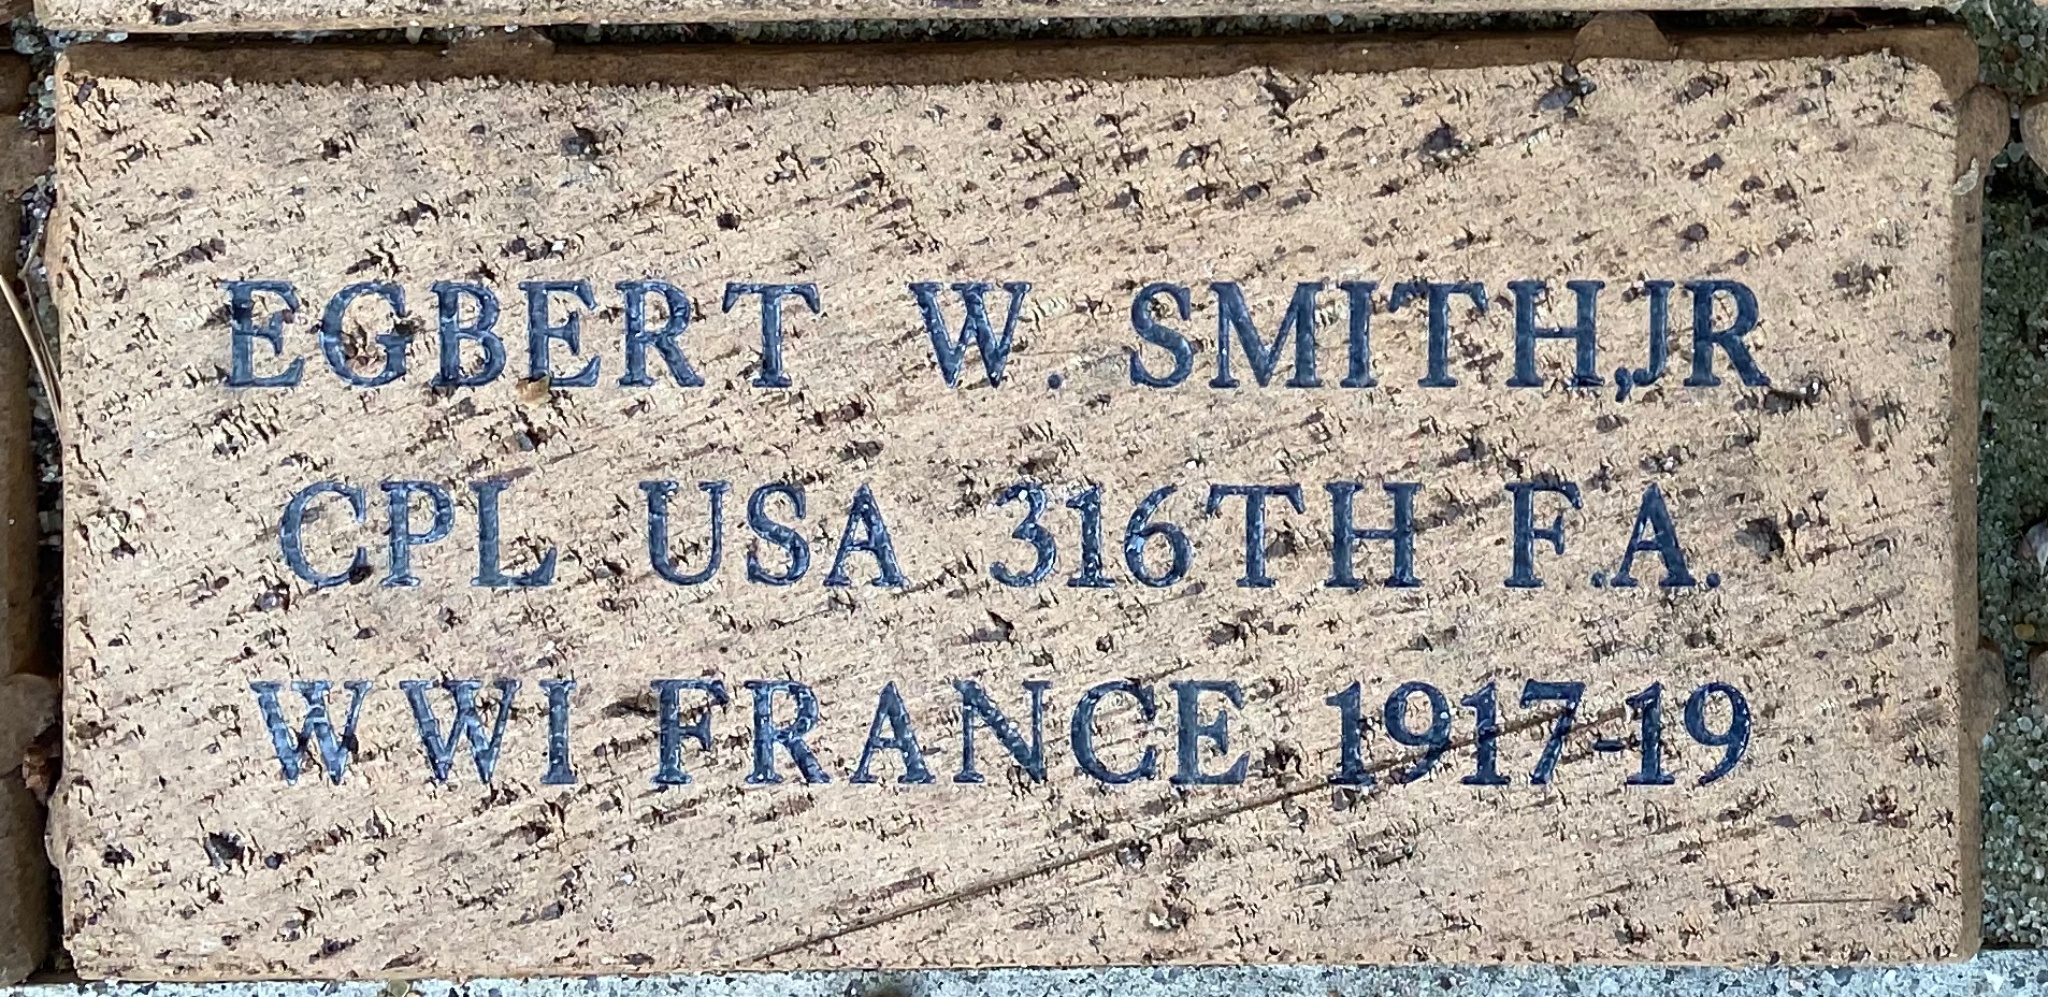 EGBERT W. SMITH, JR CPL USA 316TH F.A. WWI FRANCE 1917-19